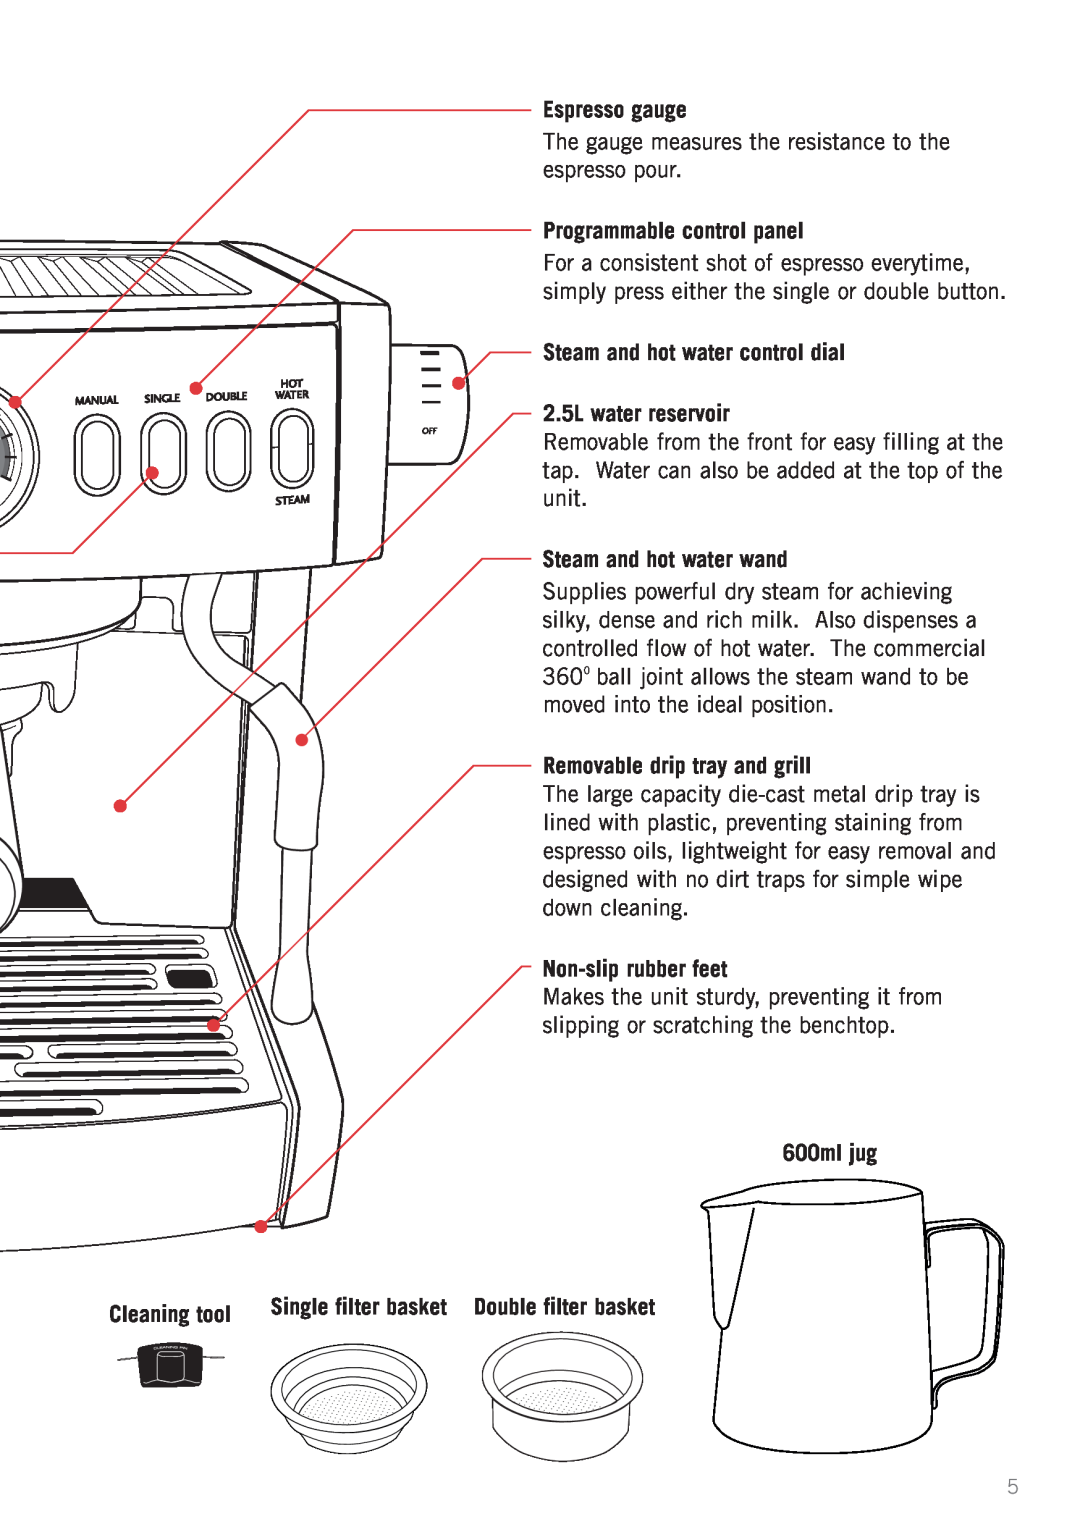 Sunbeam EM6200 manual Espresso gauge, Programmable control panel, Steam and hot water control dial 2.5L water reservoir 